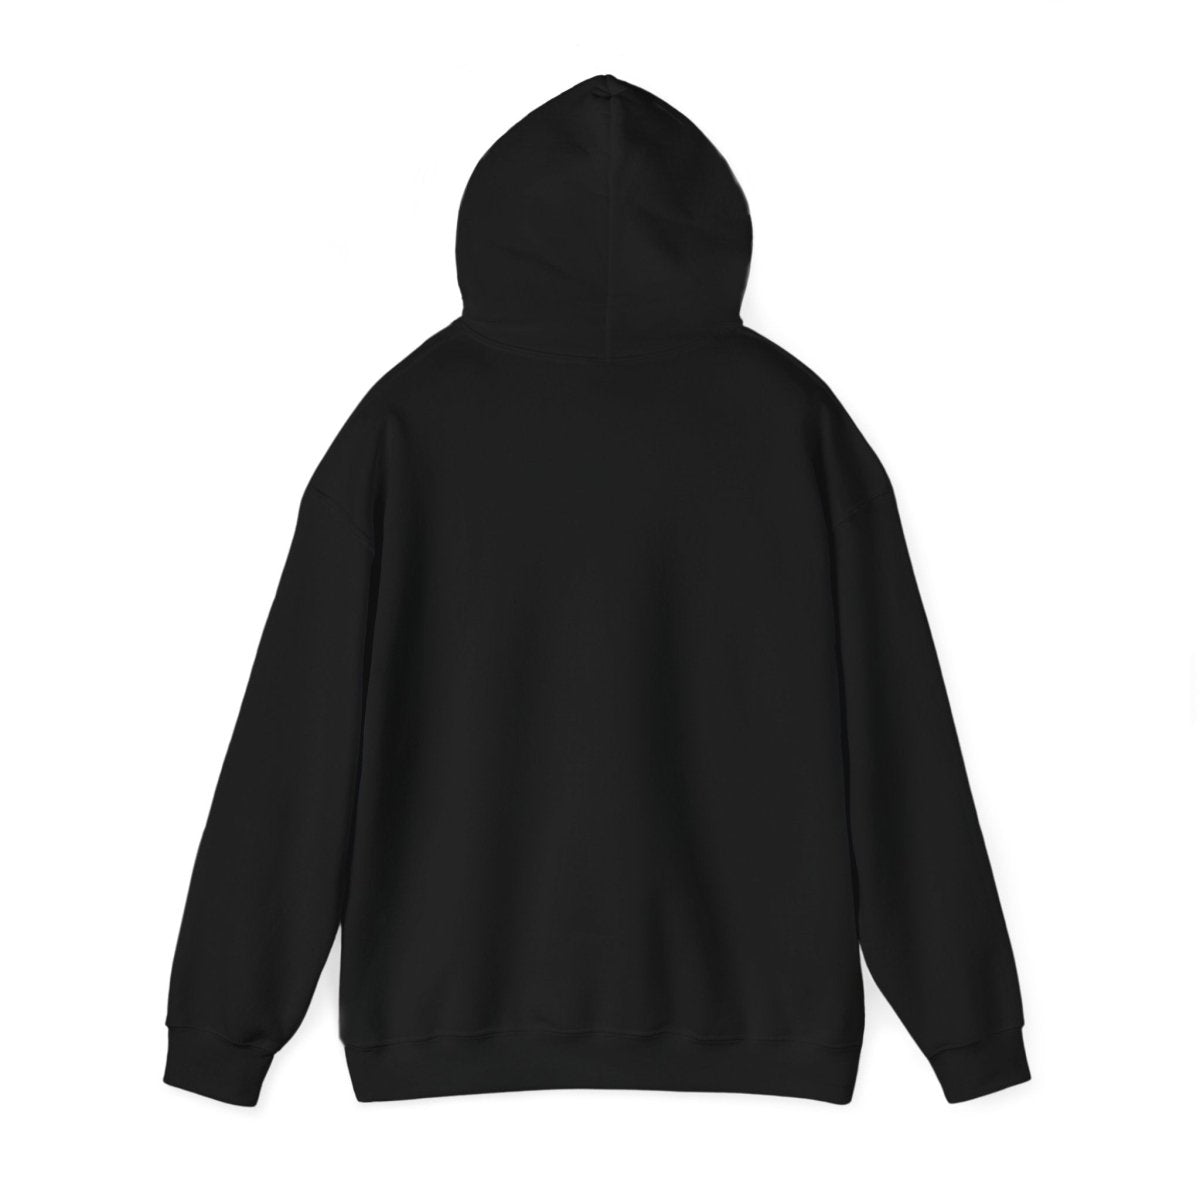 Believe Hooded Sweatshirt - Unthreaded